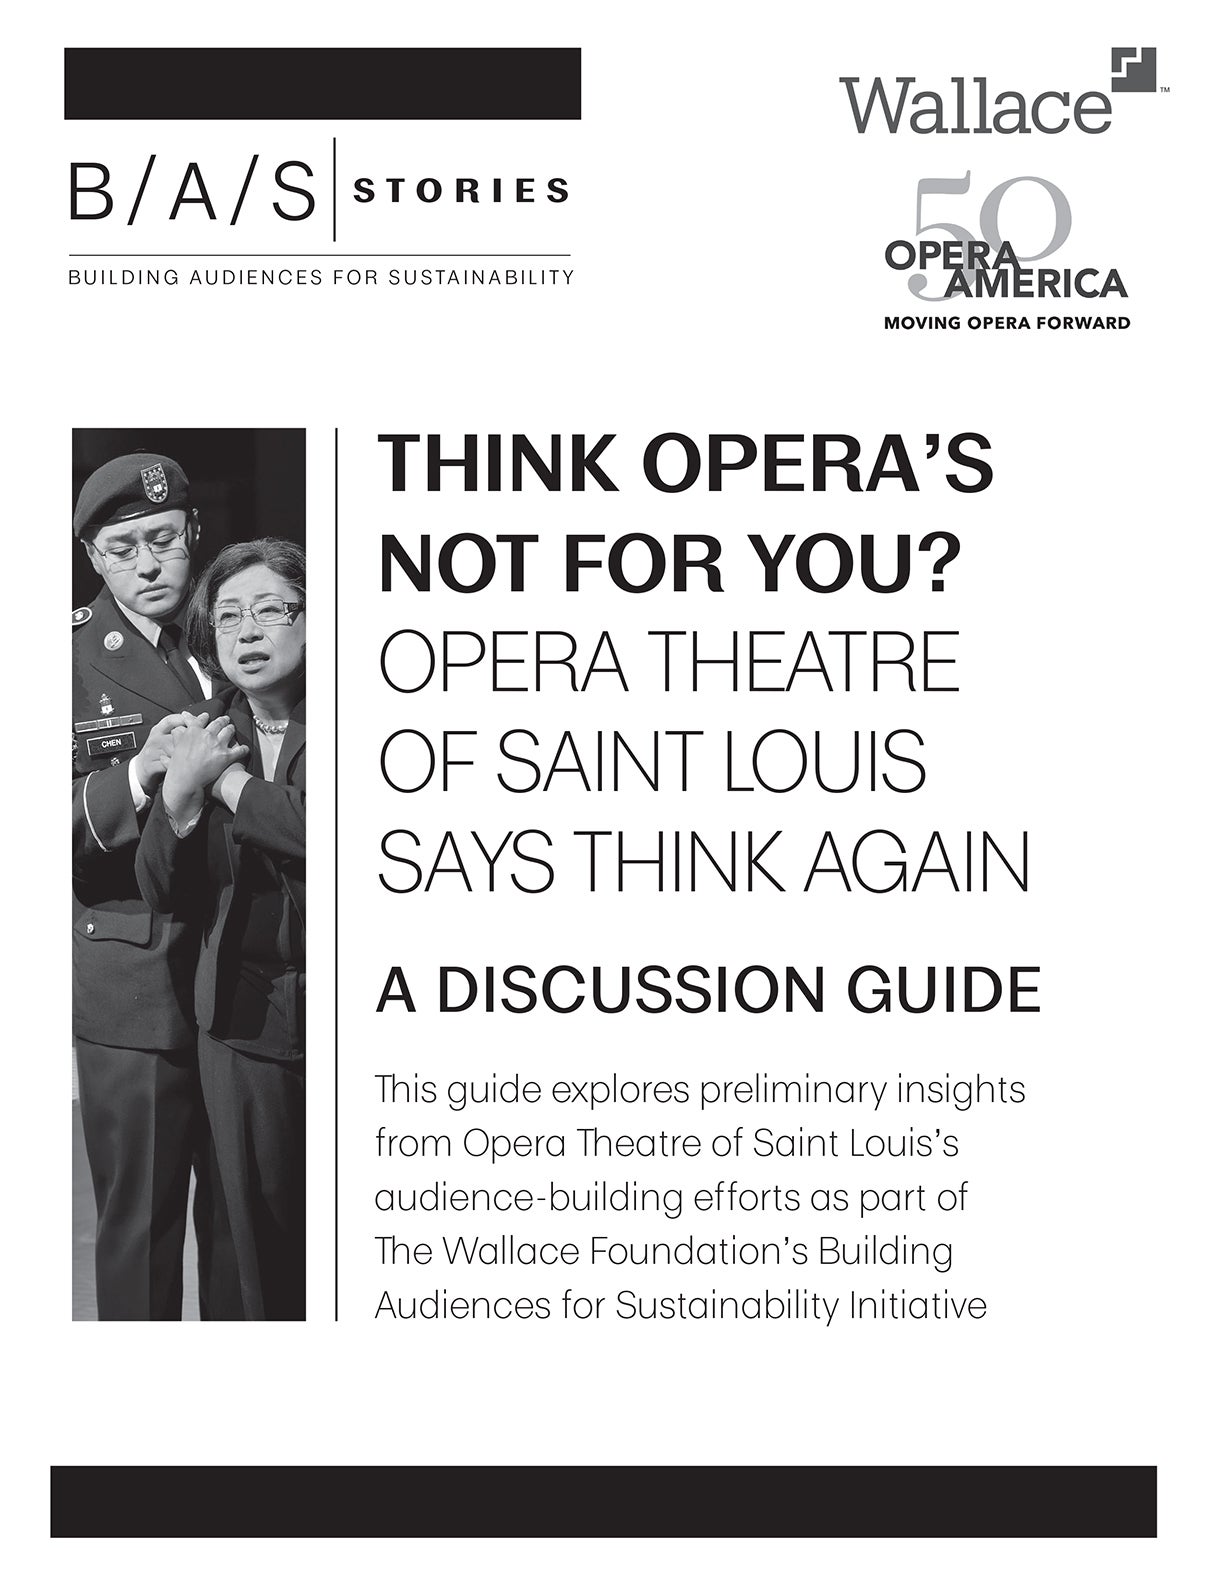 Opera Theatre of Saint Louis